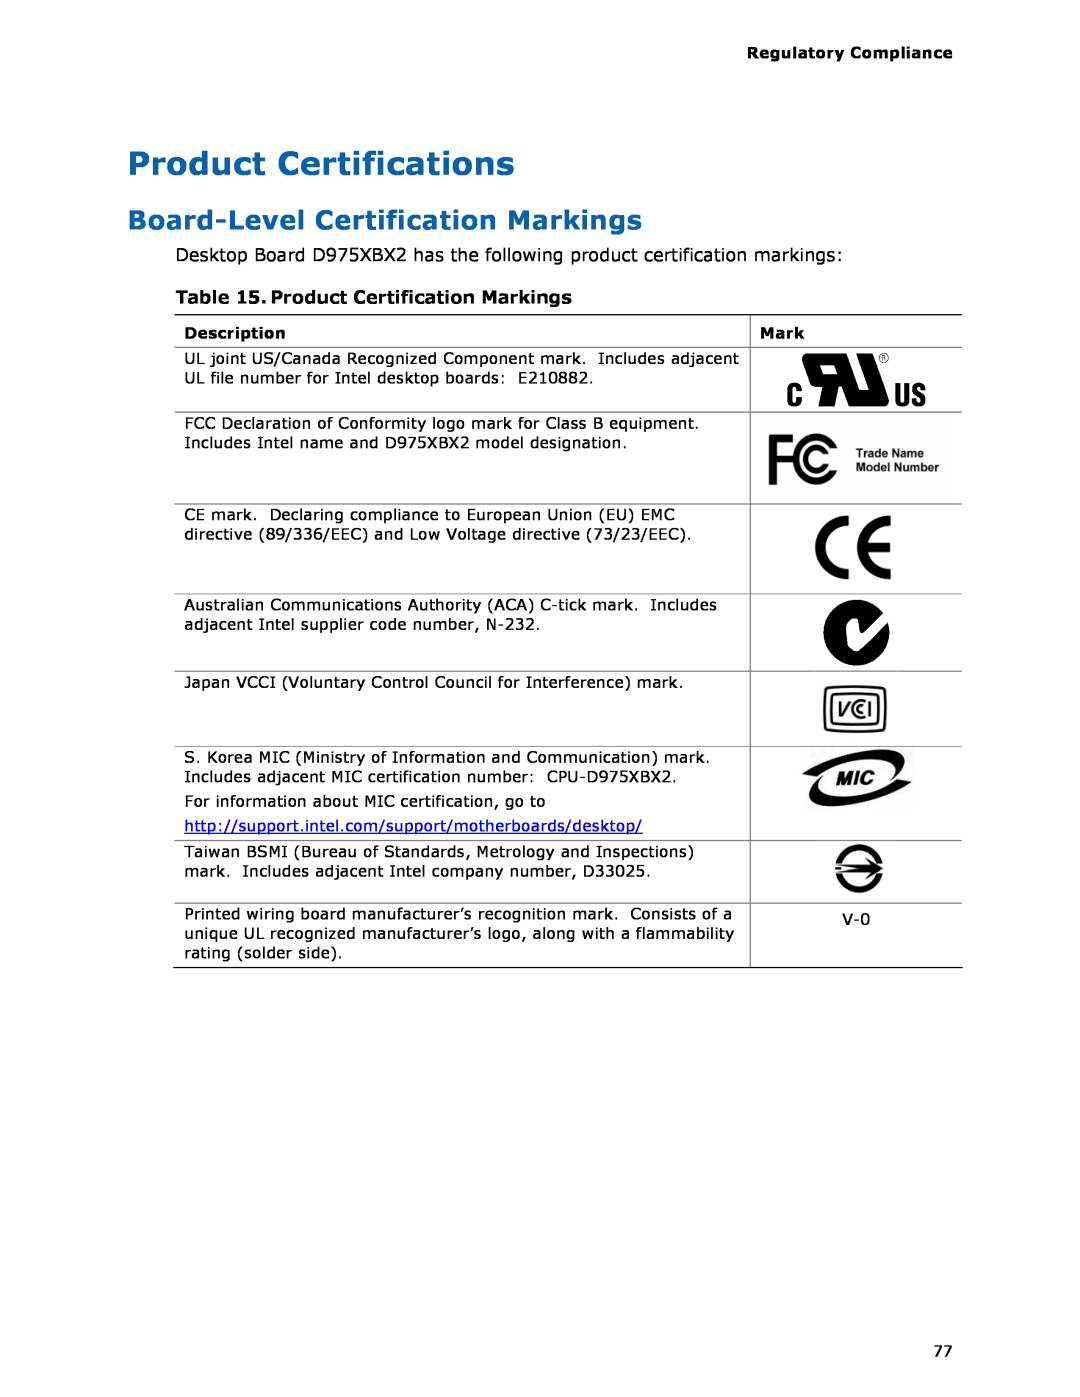 Intel D975XBX2 manual Product Certifications, Board-LevelCertification Markings 